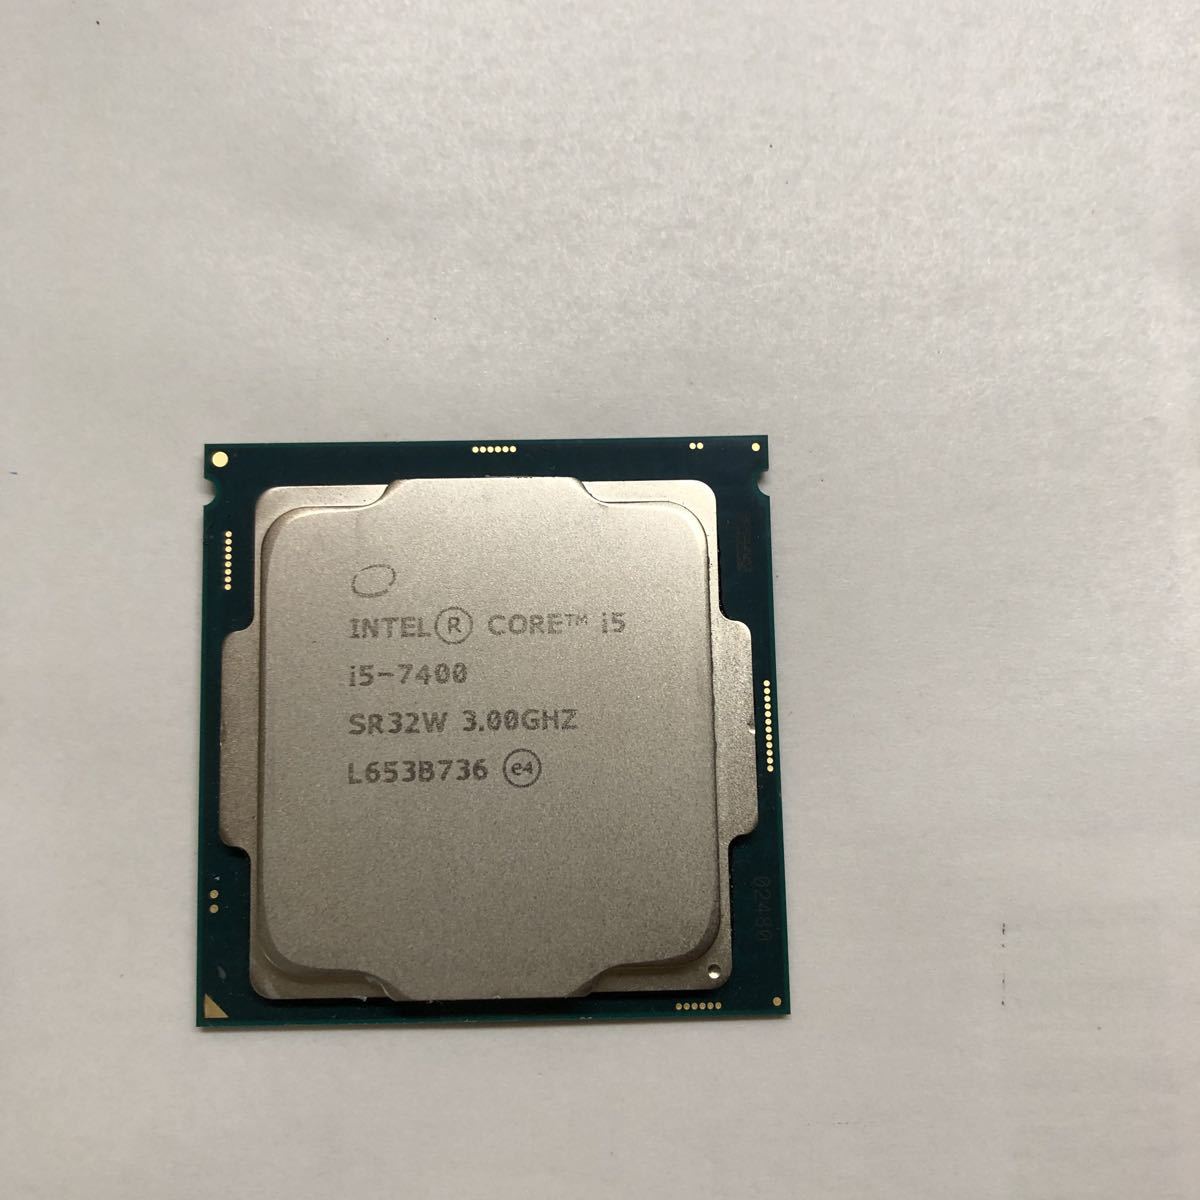 Intel Core i5-7400 3.00GHz SR32W /016 | JChere雅虎拍卖代购